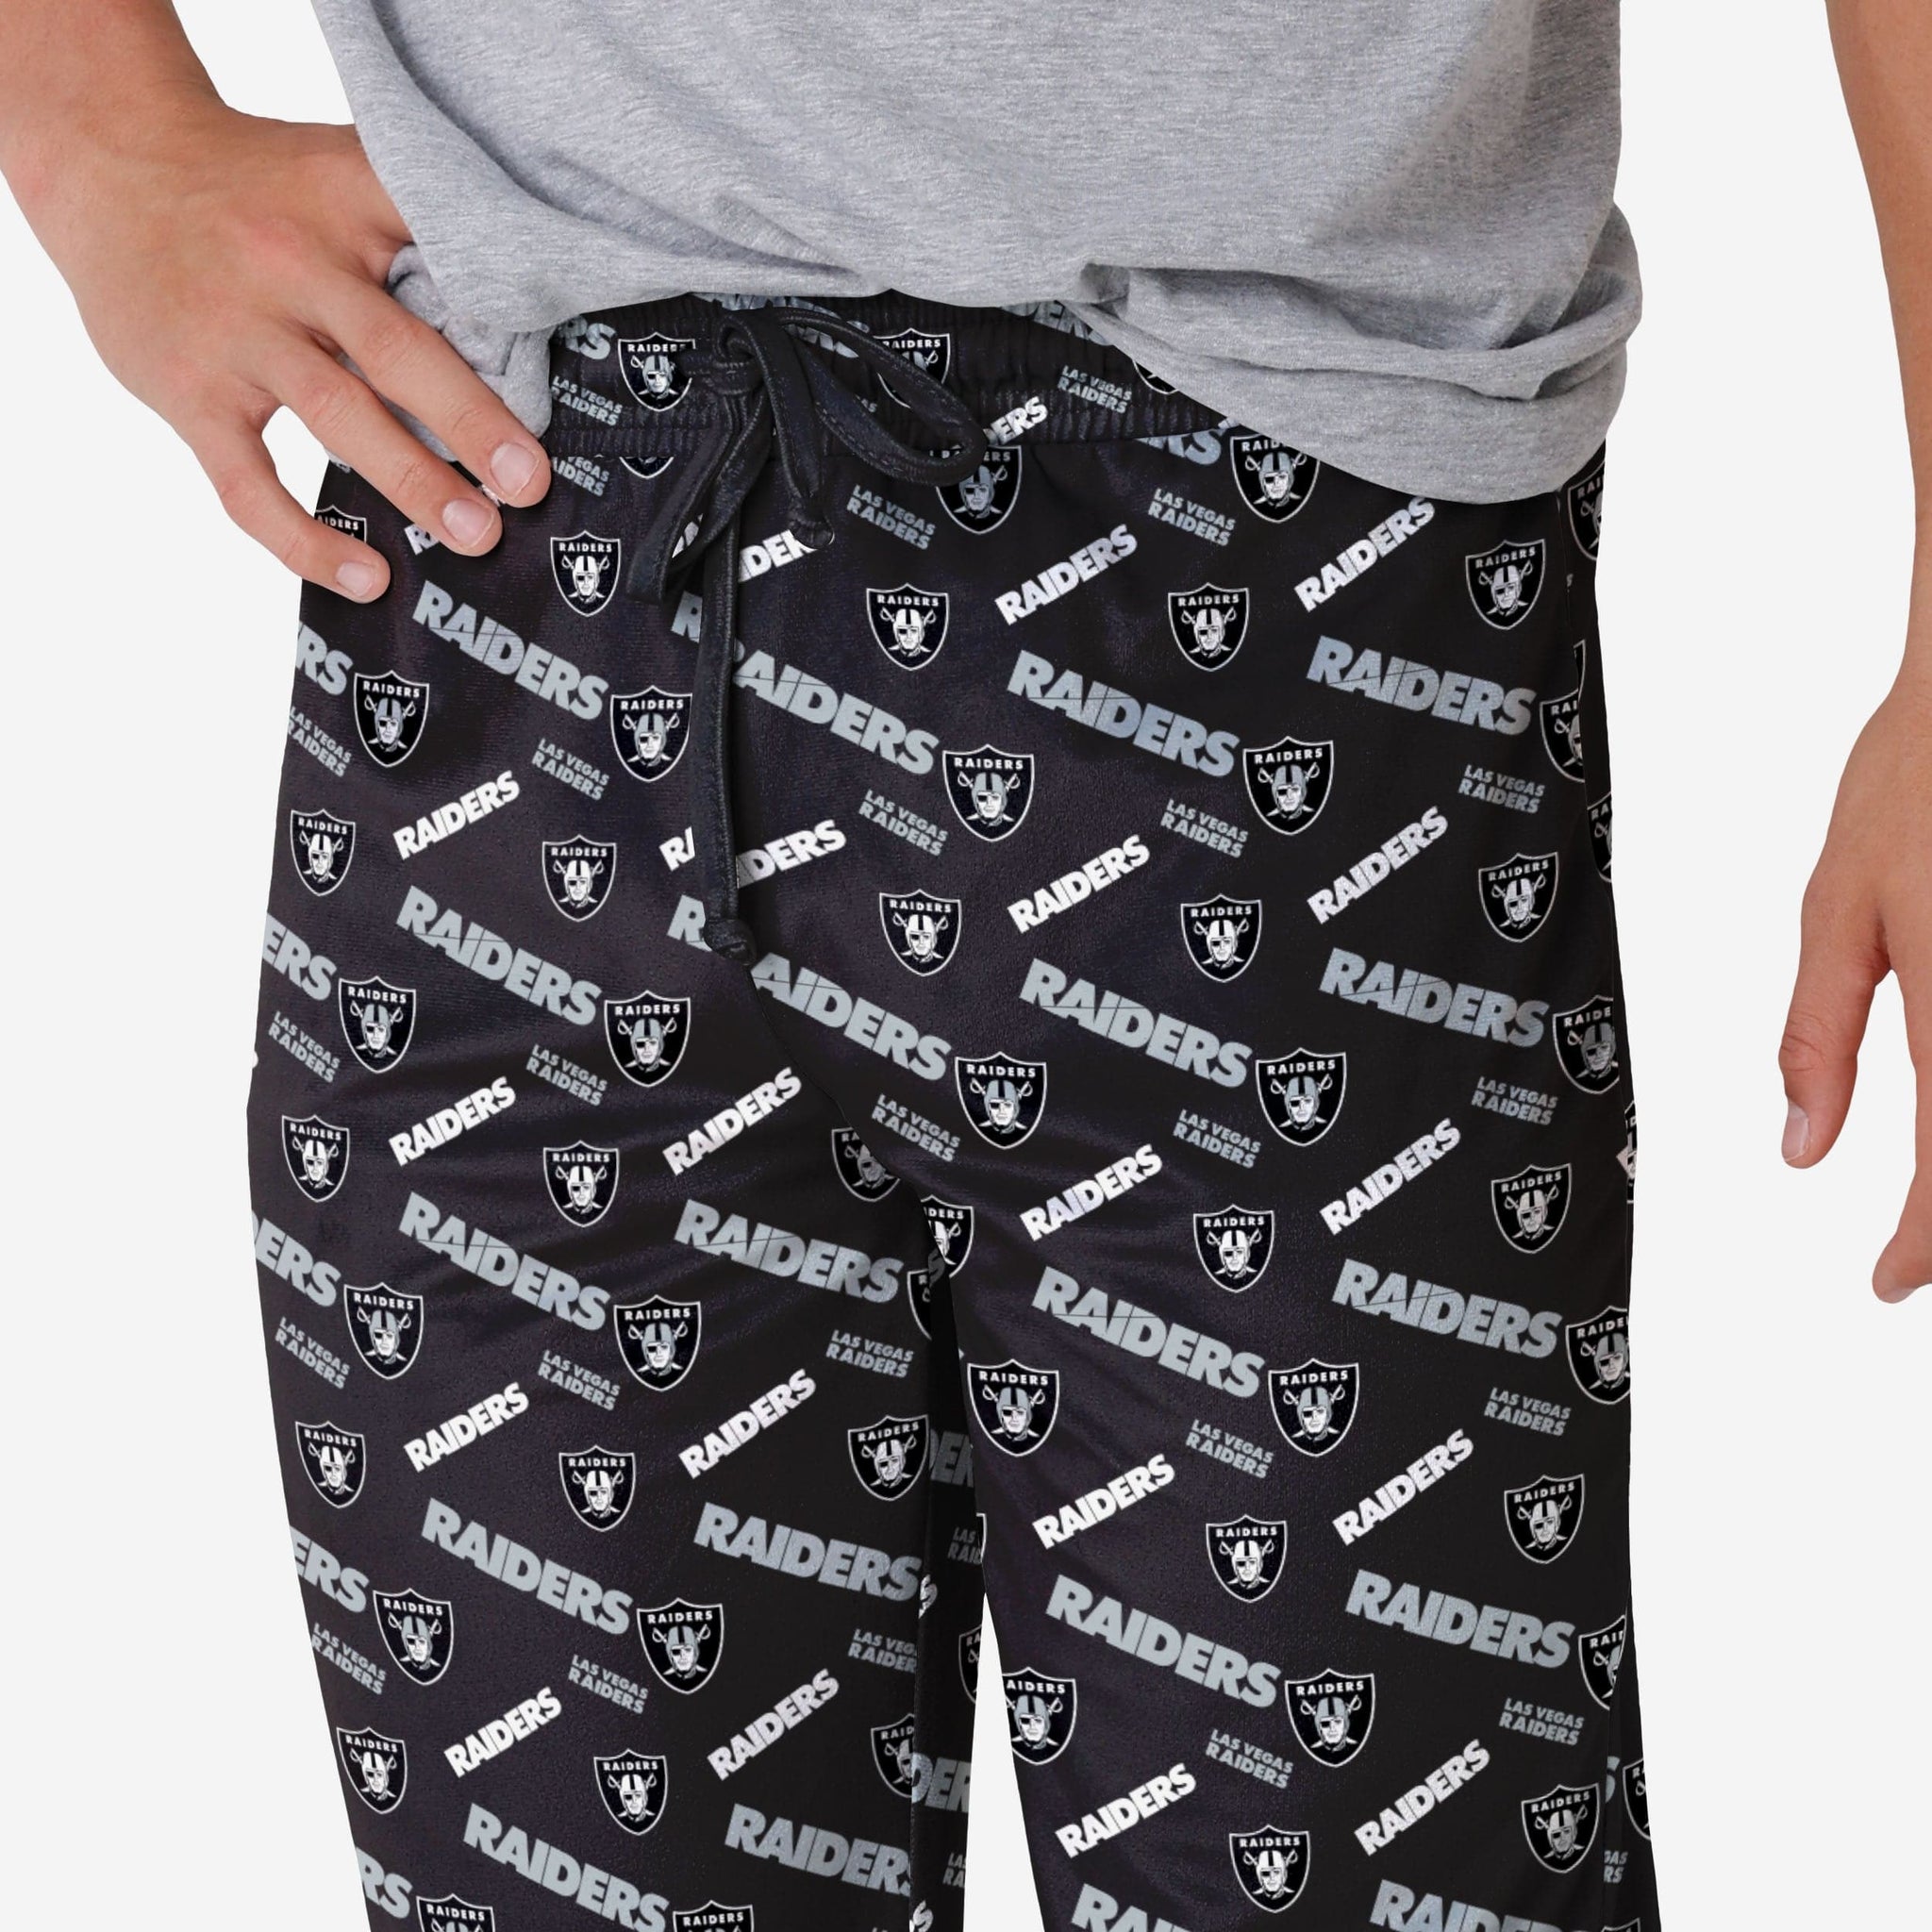 FOCO NFL Las Vegas Raiders Men's Pajama Shirt and Pants Lounge Set